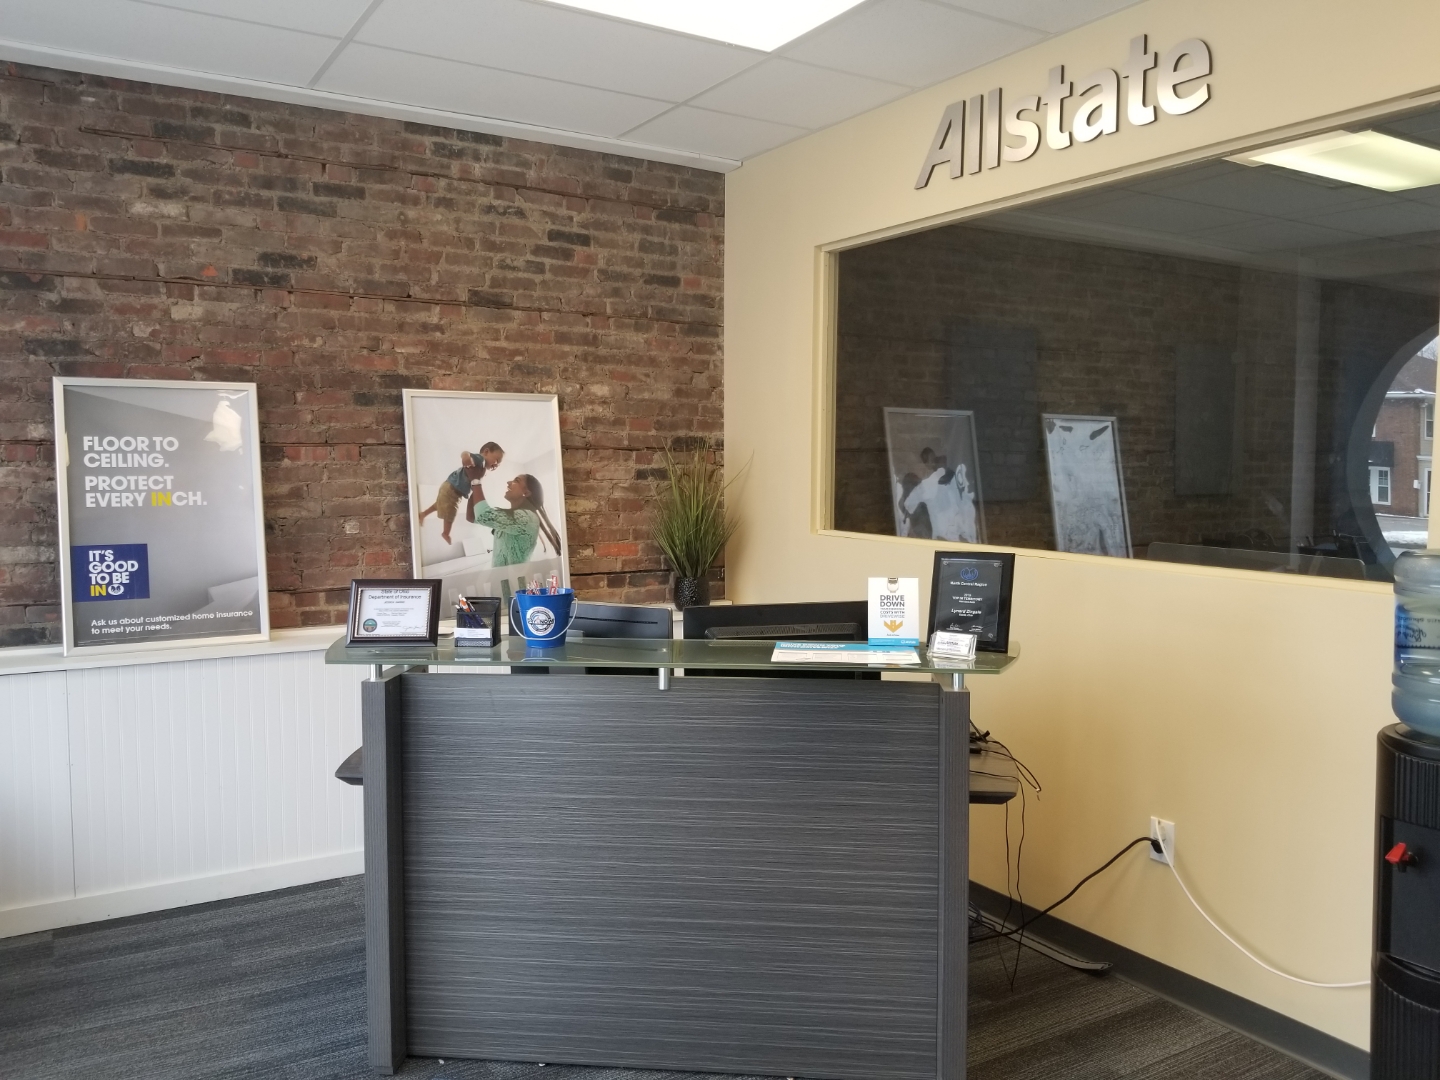 Lynard Zingale: Allstate Insurance Photo